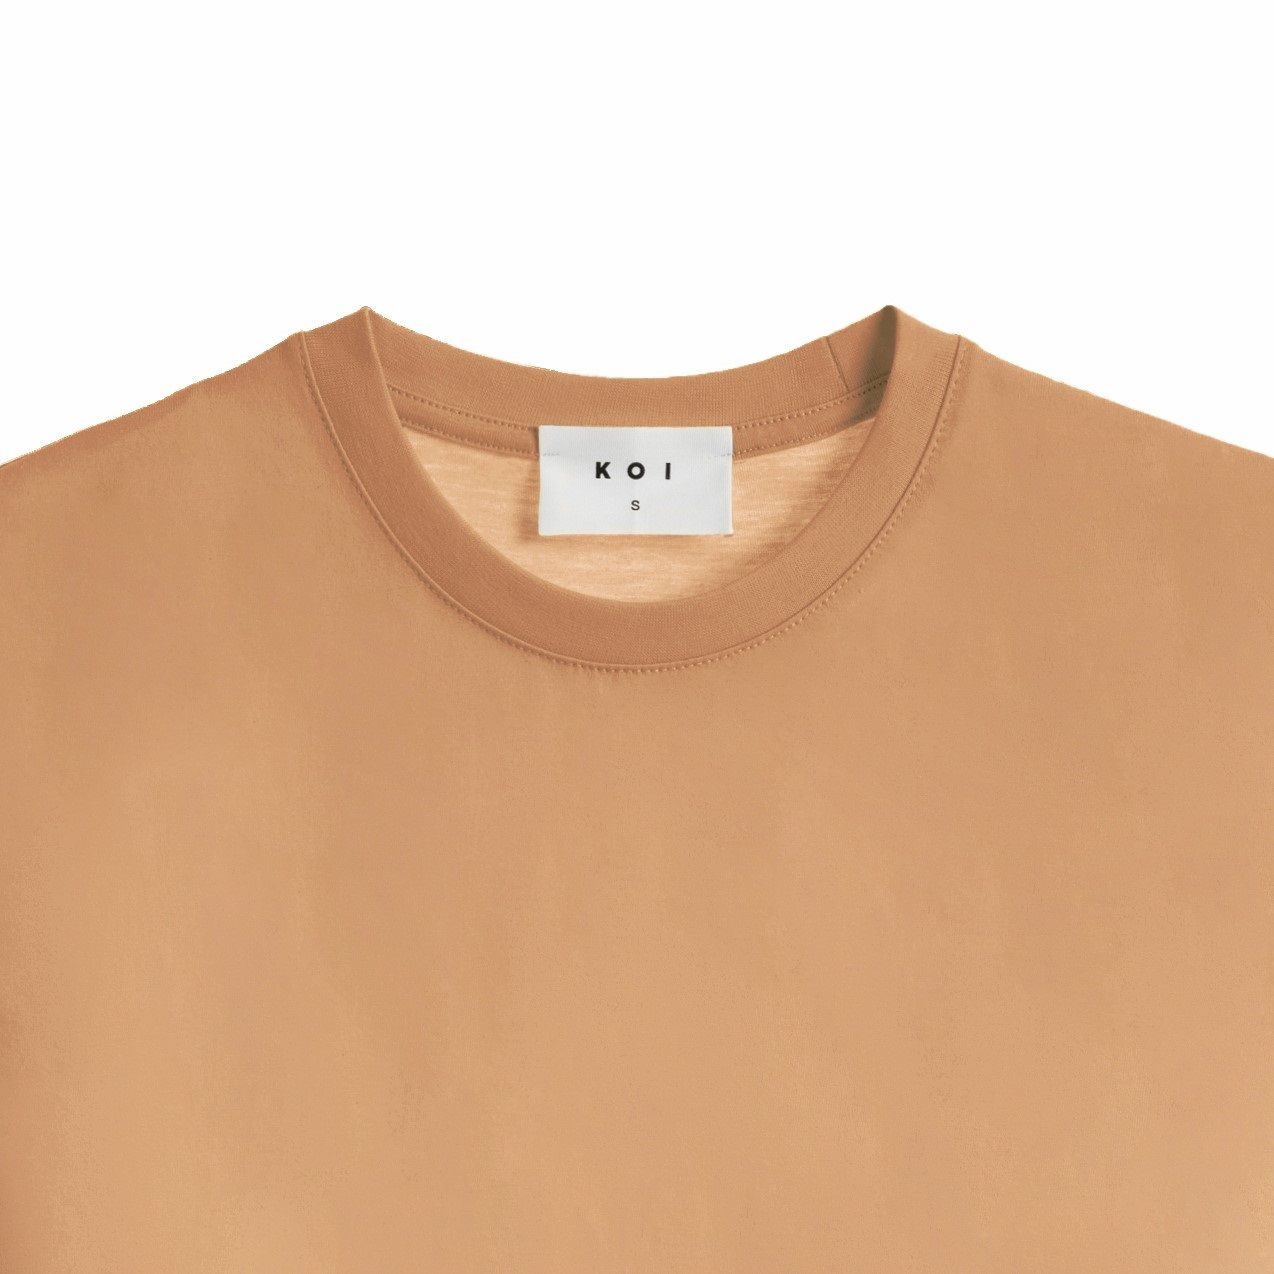 تی شرت آستین کوتاه زنانه کوی مدل رگولار هی گرل کد 444 رنگ کاراملی -  - 2